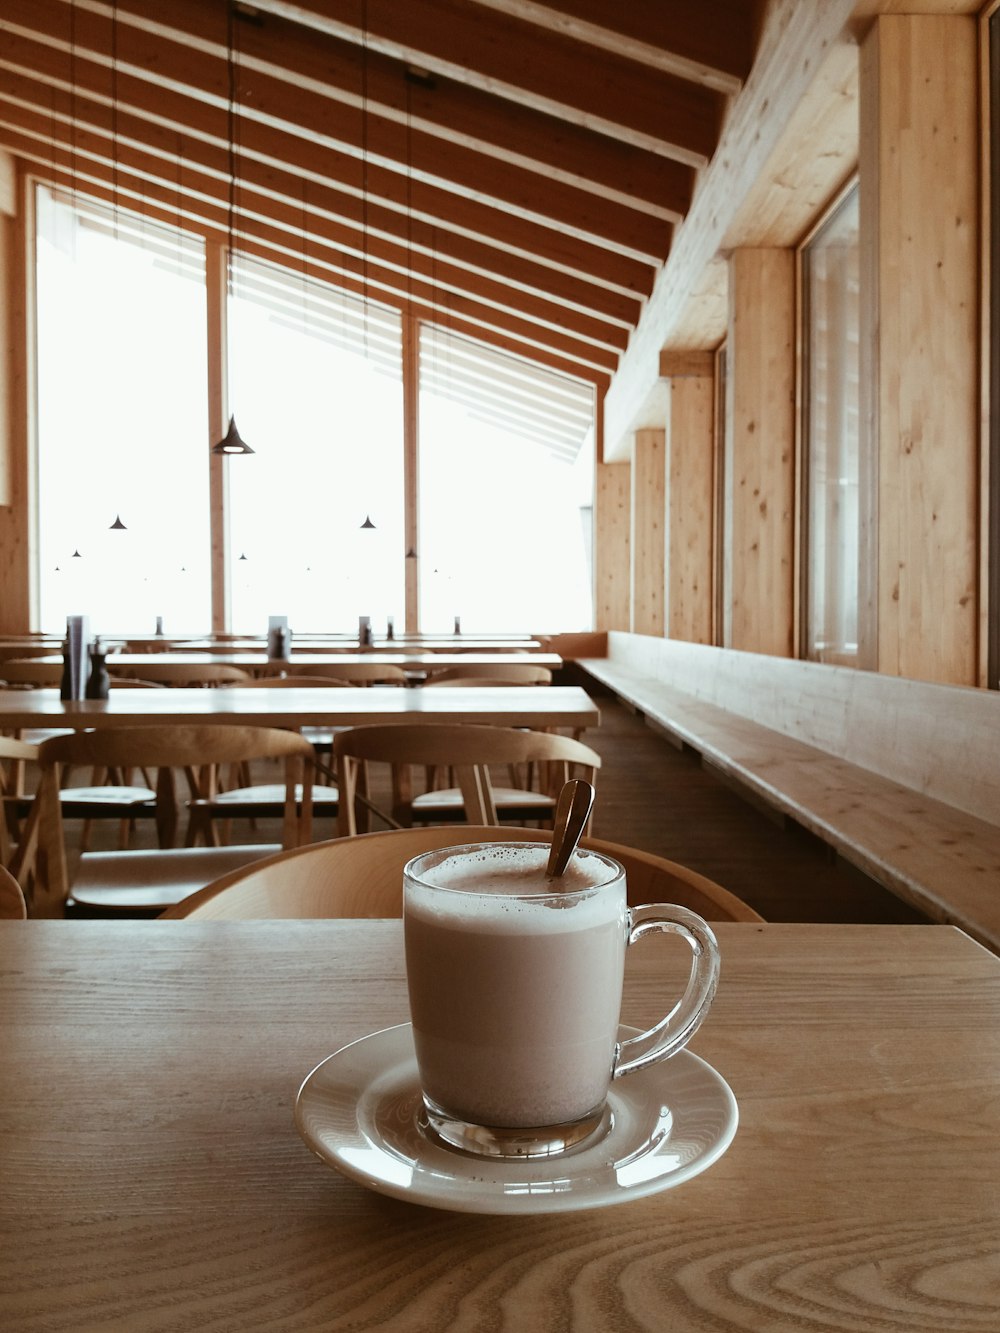 Mug en céramique blanche sur table en bois marron